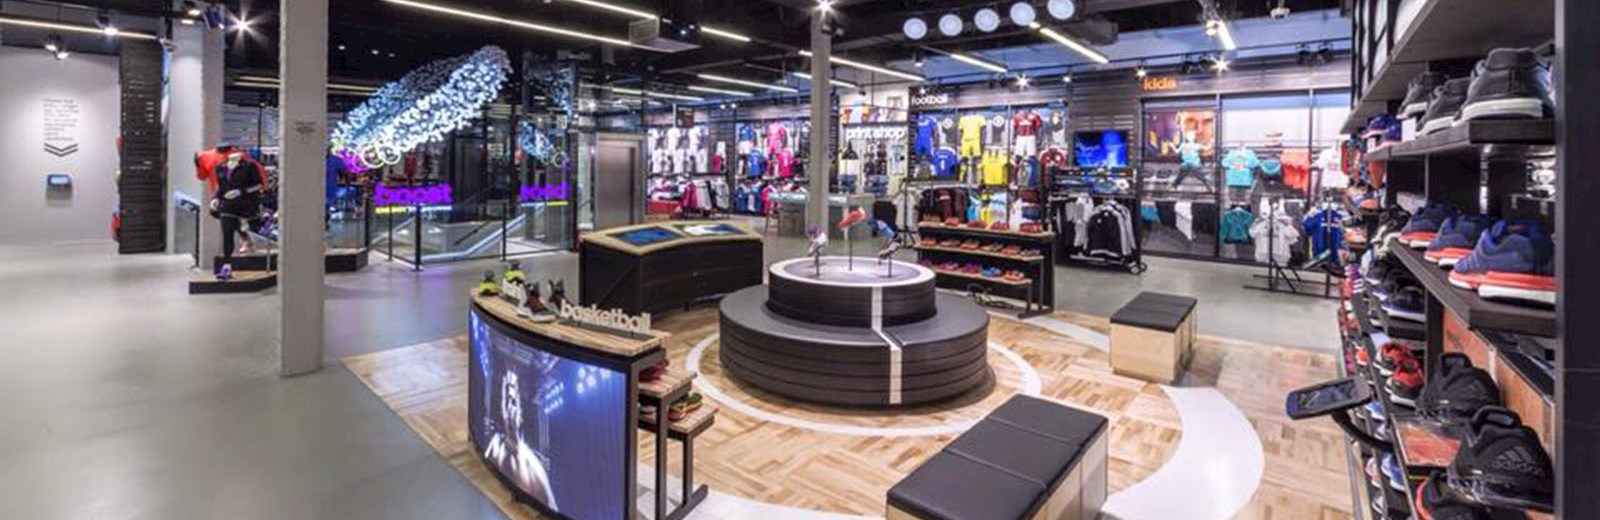 Adidas Store Internal - Mace Group 